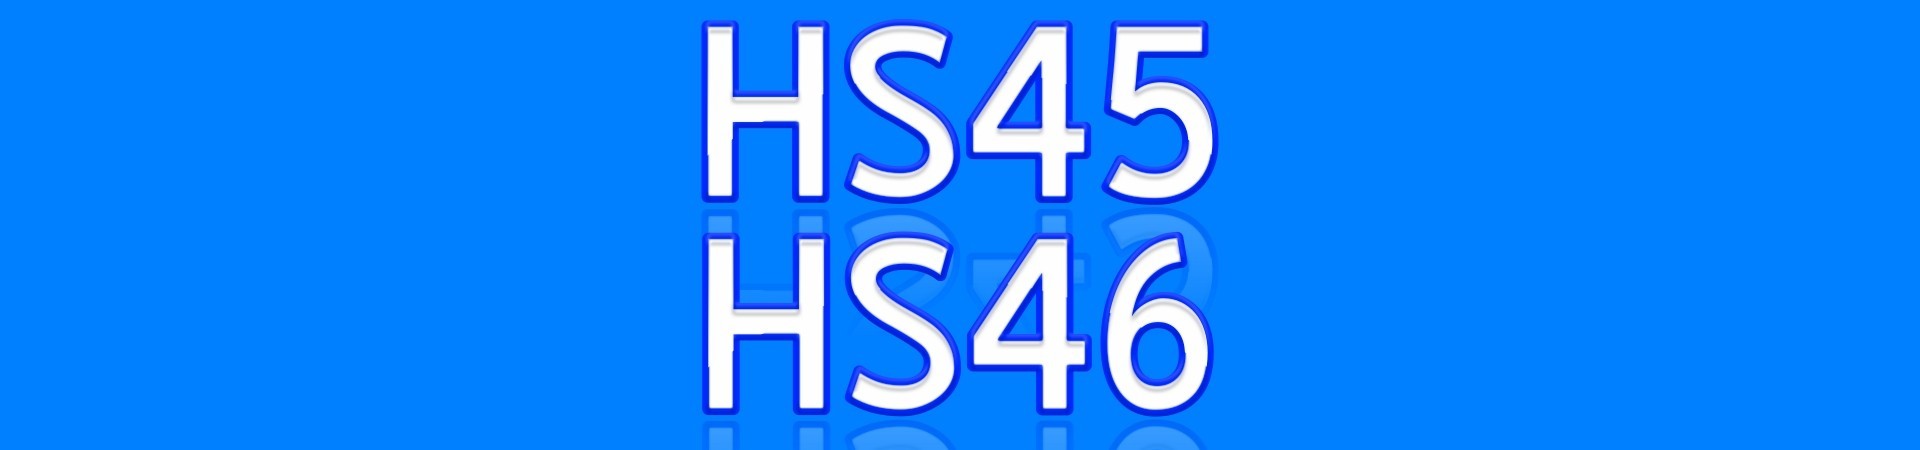 REPUESTOS para Cortasetos STIHL HS45 HS46